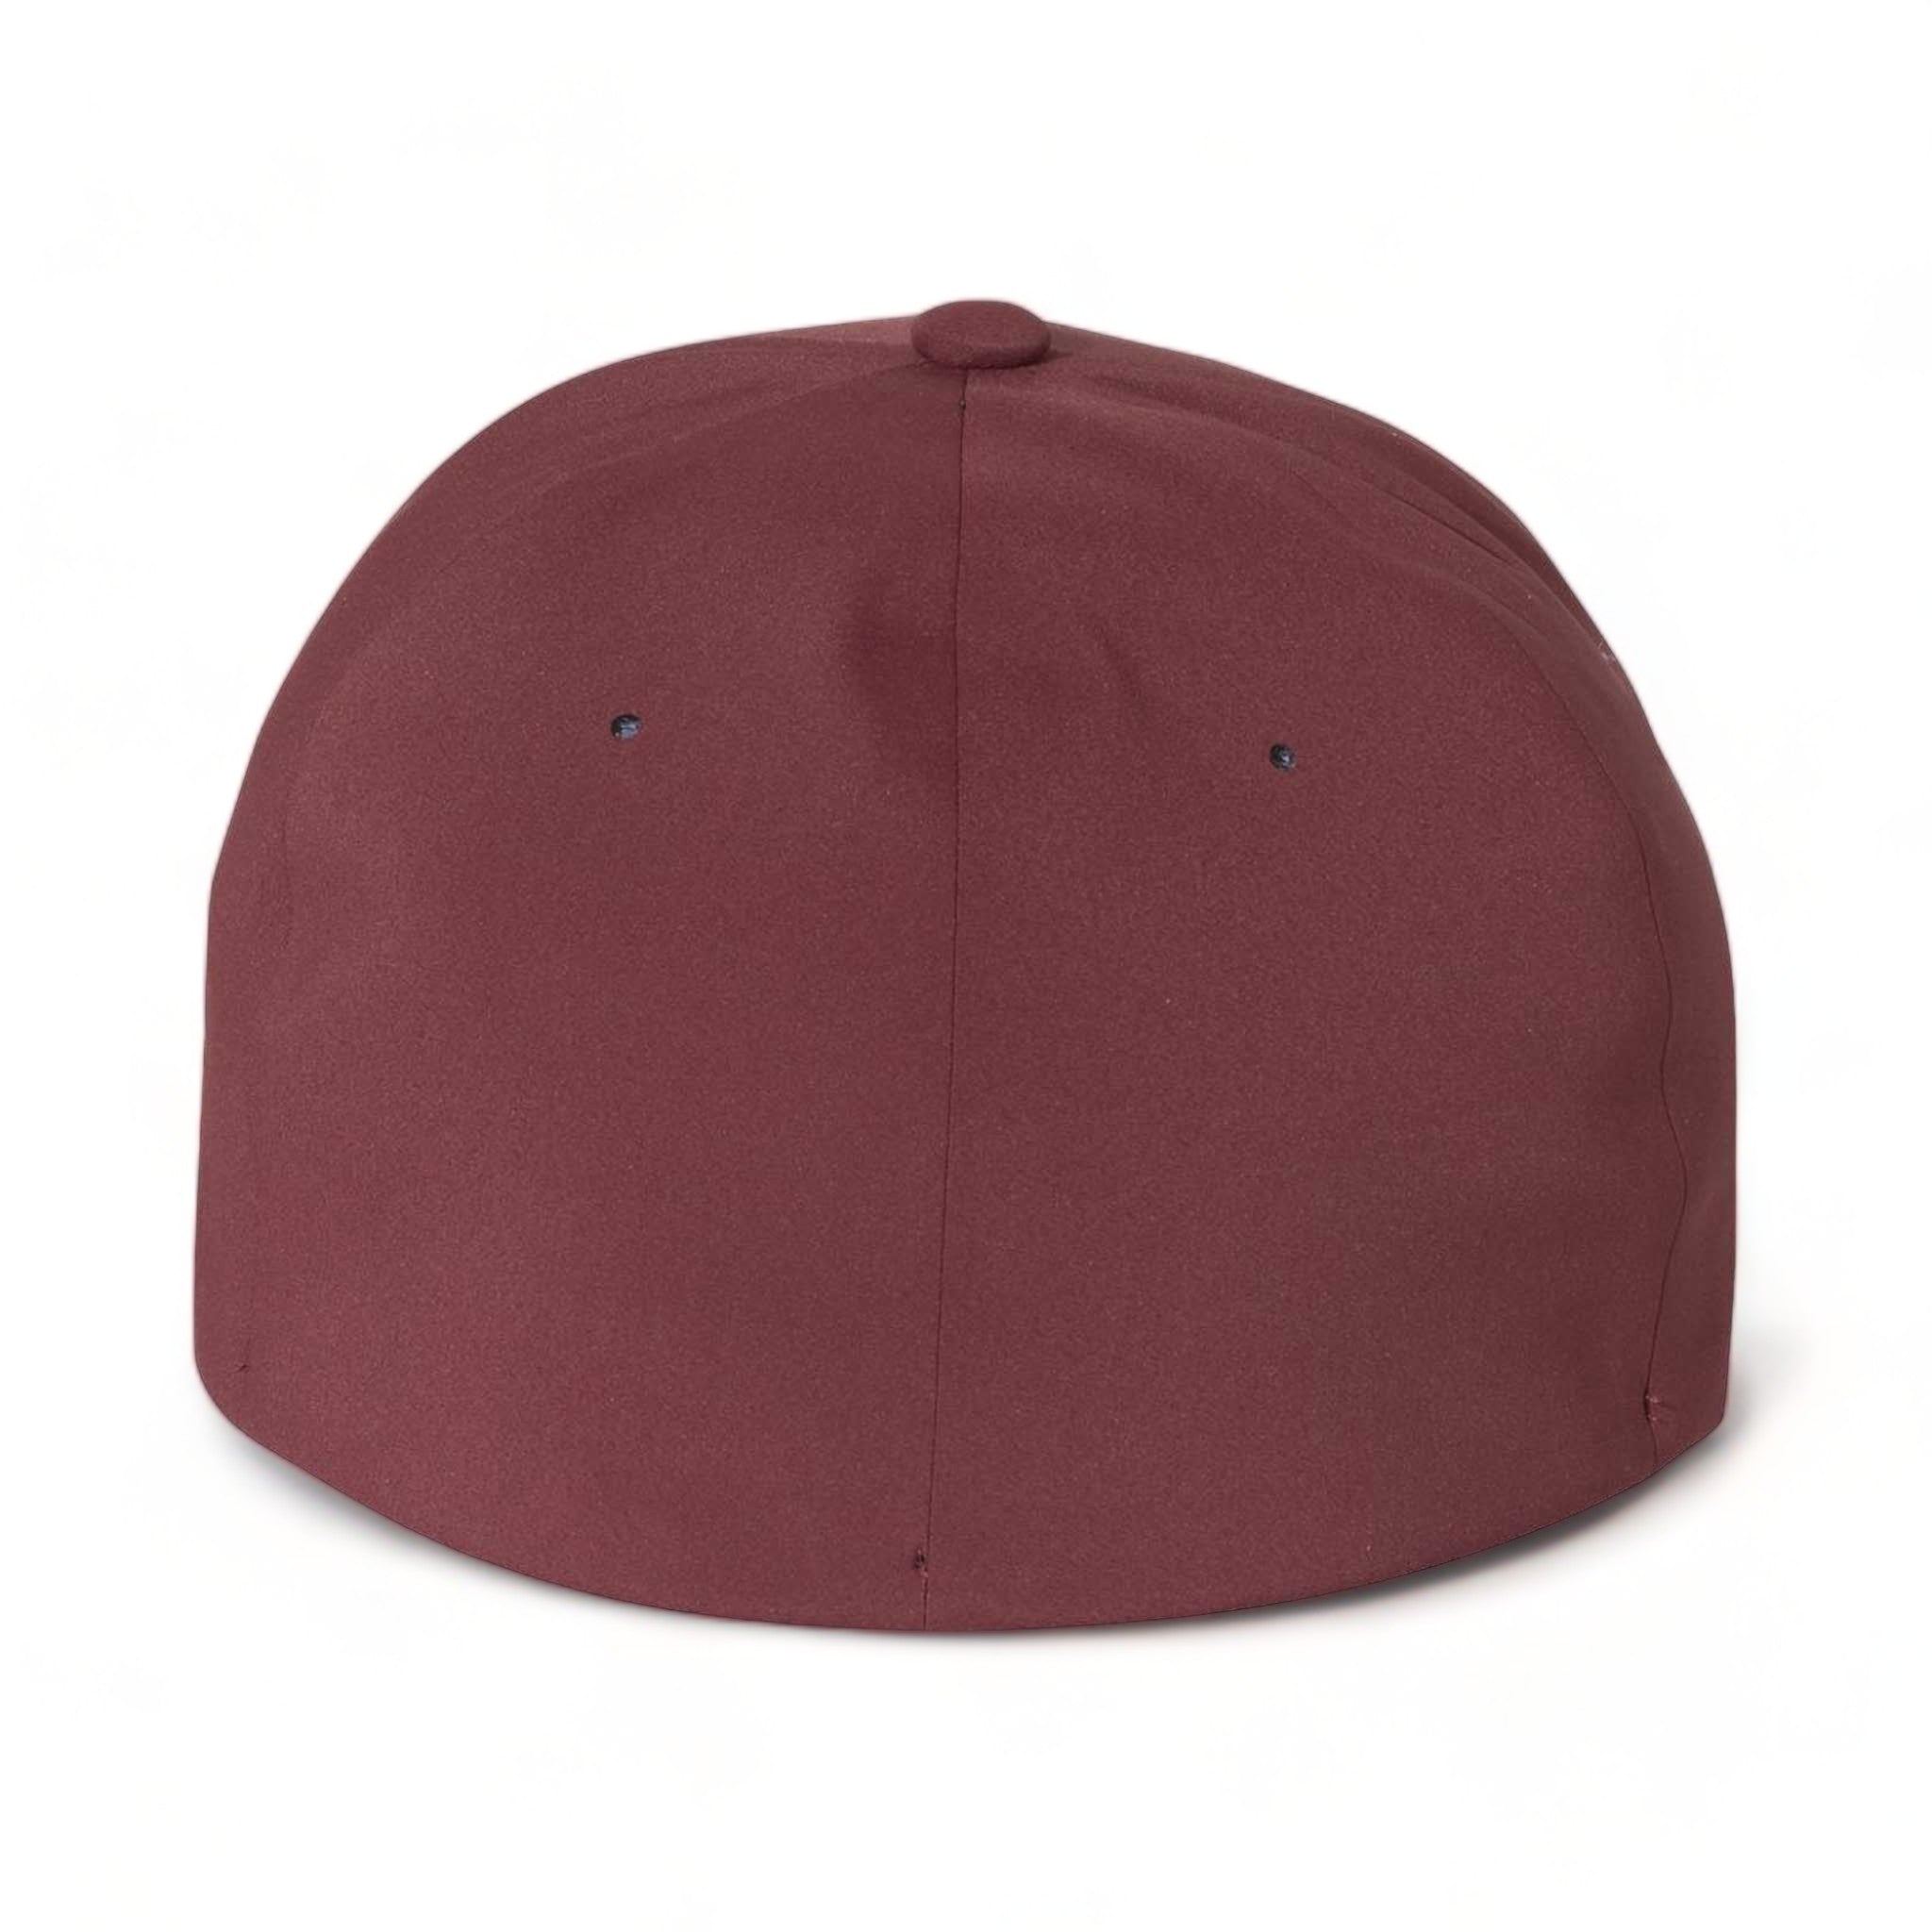 Back view of Flexfit 180 custom hat in maroon